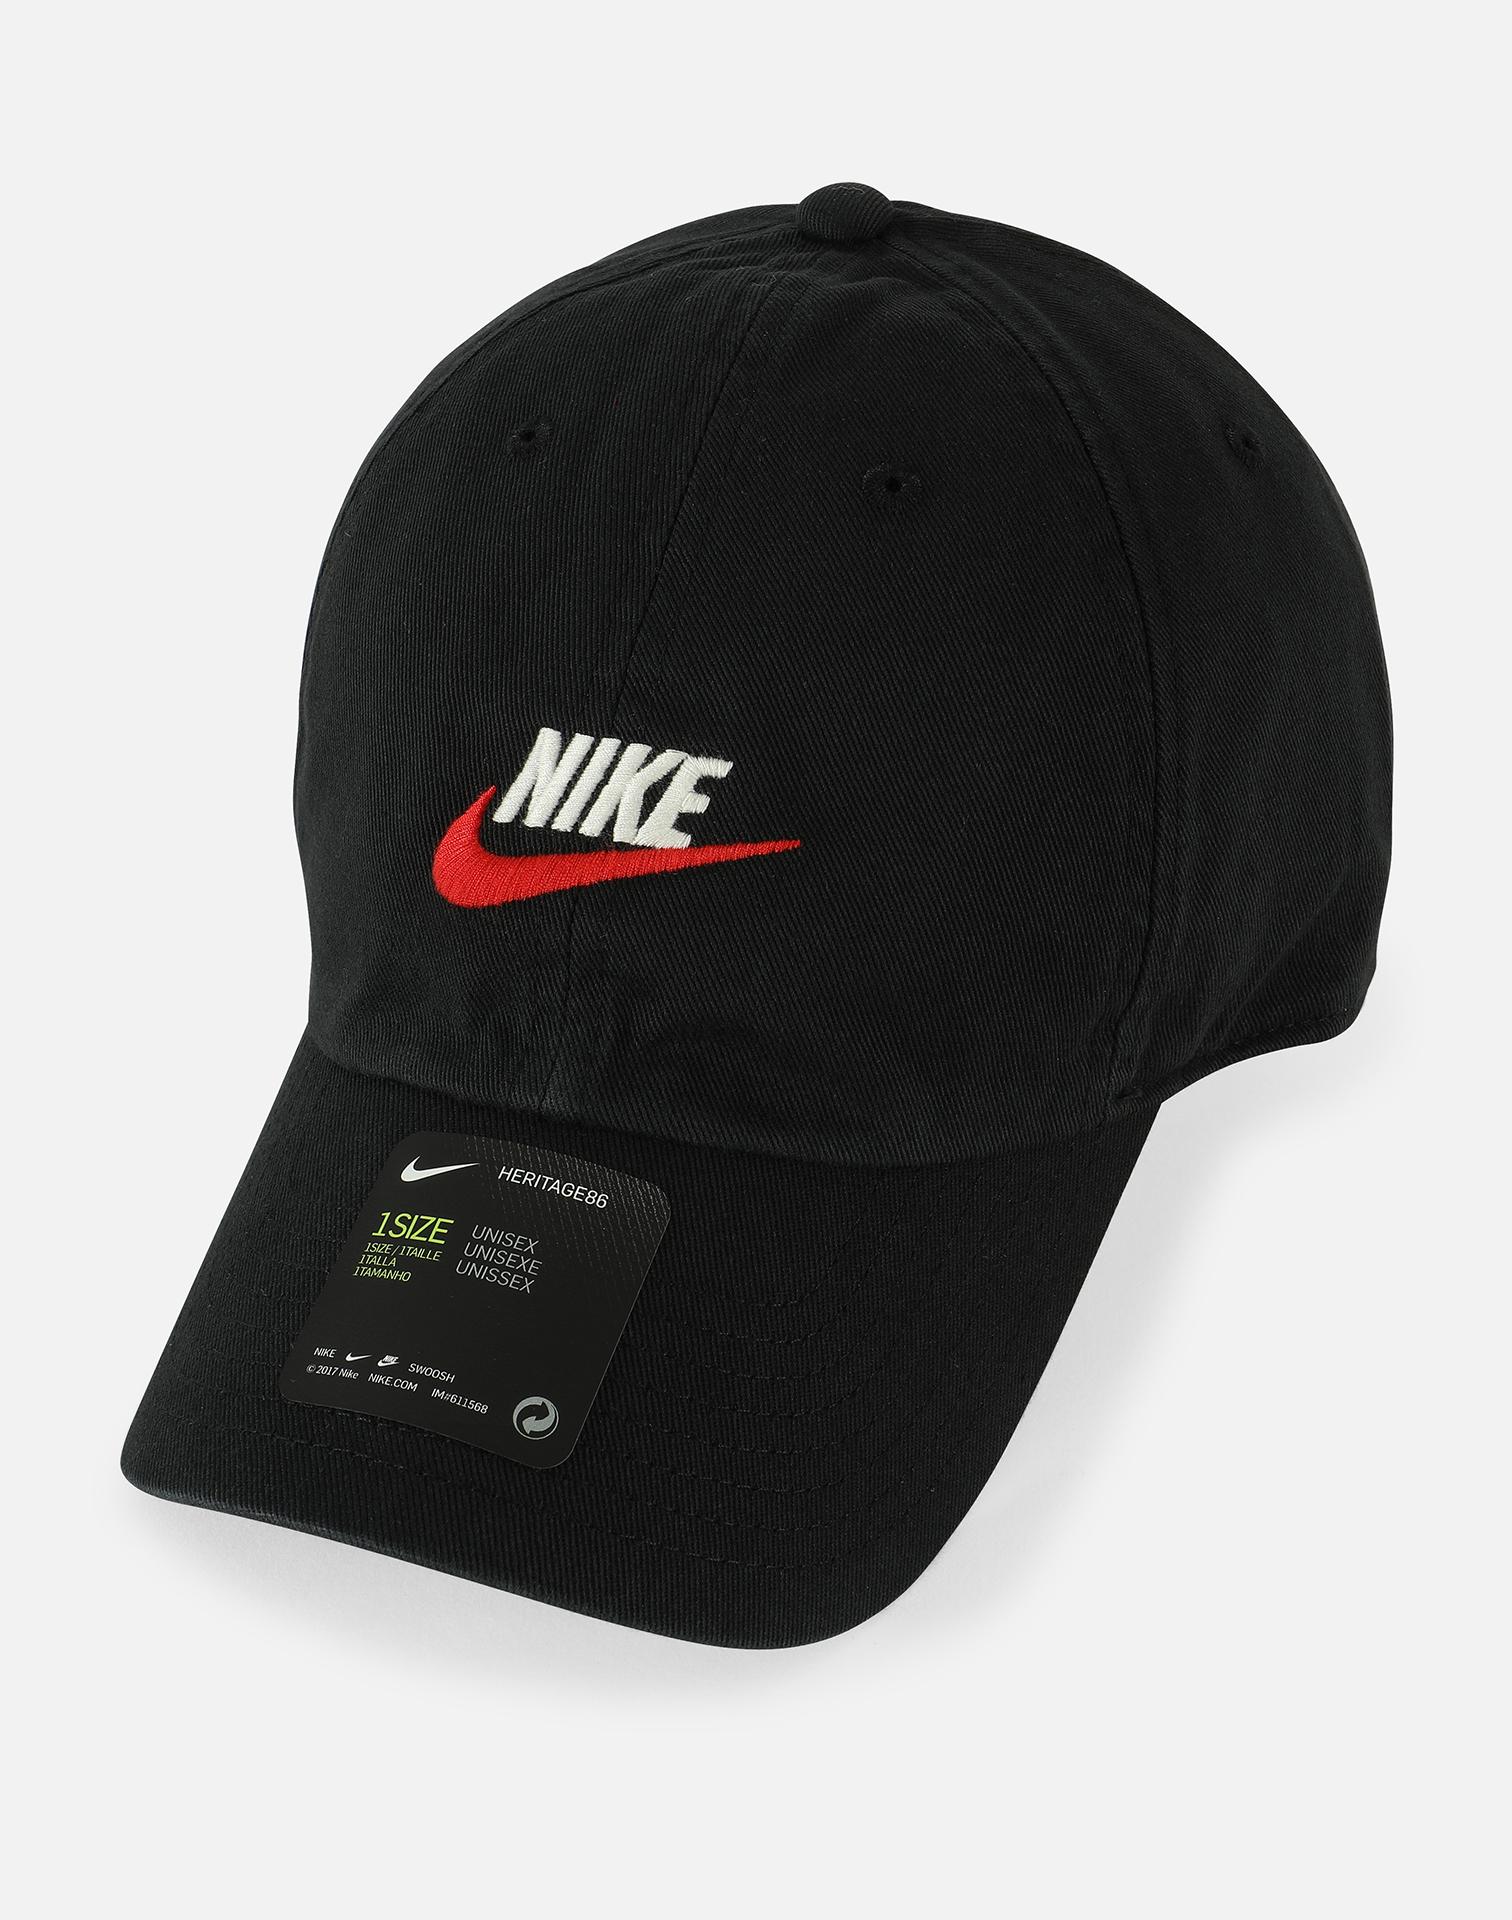 Nike Cotton Nsw H86 Futura Cap in Black for Men - Lyst